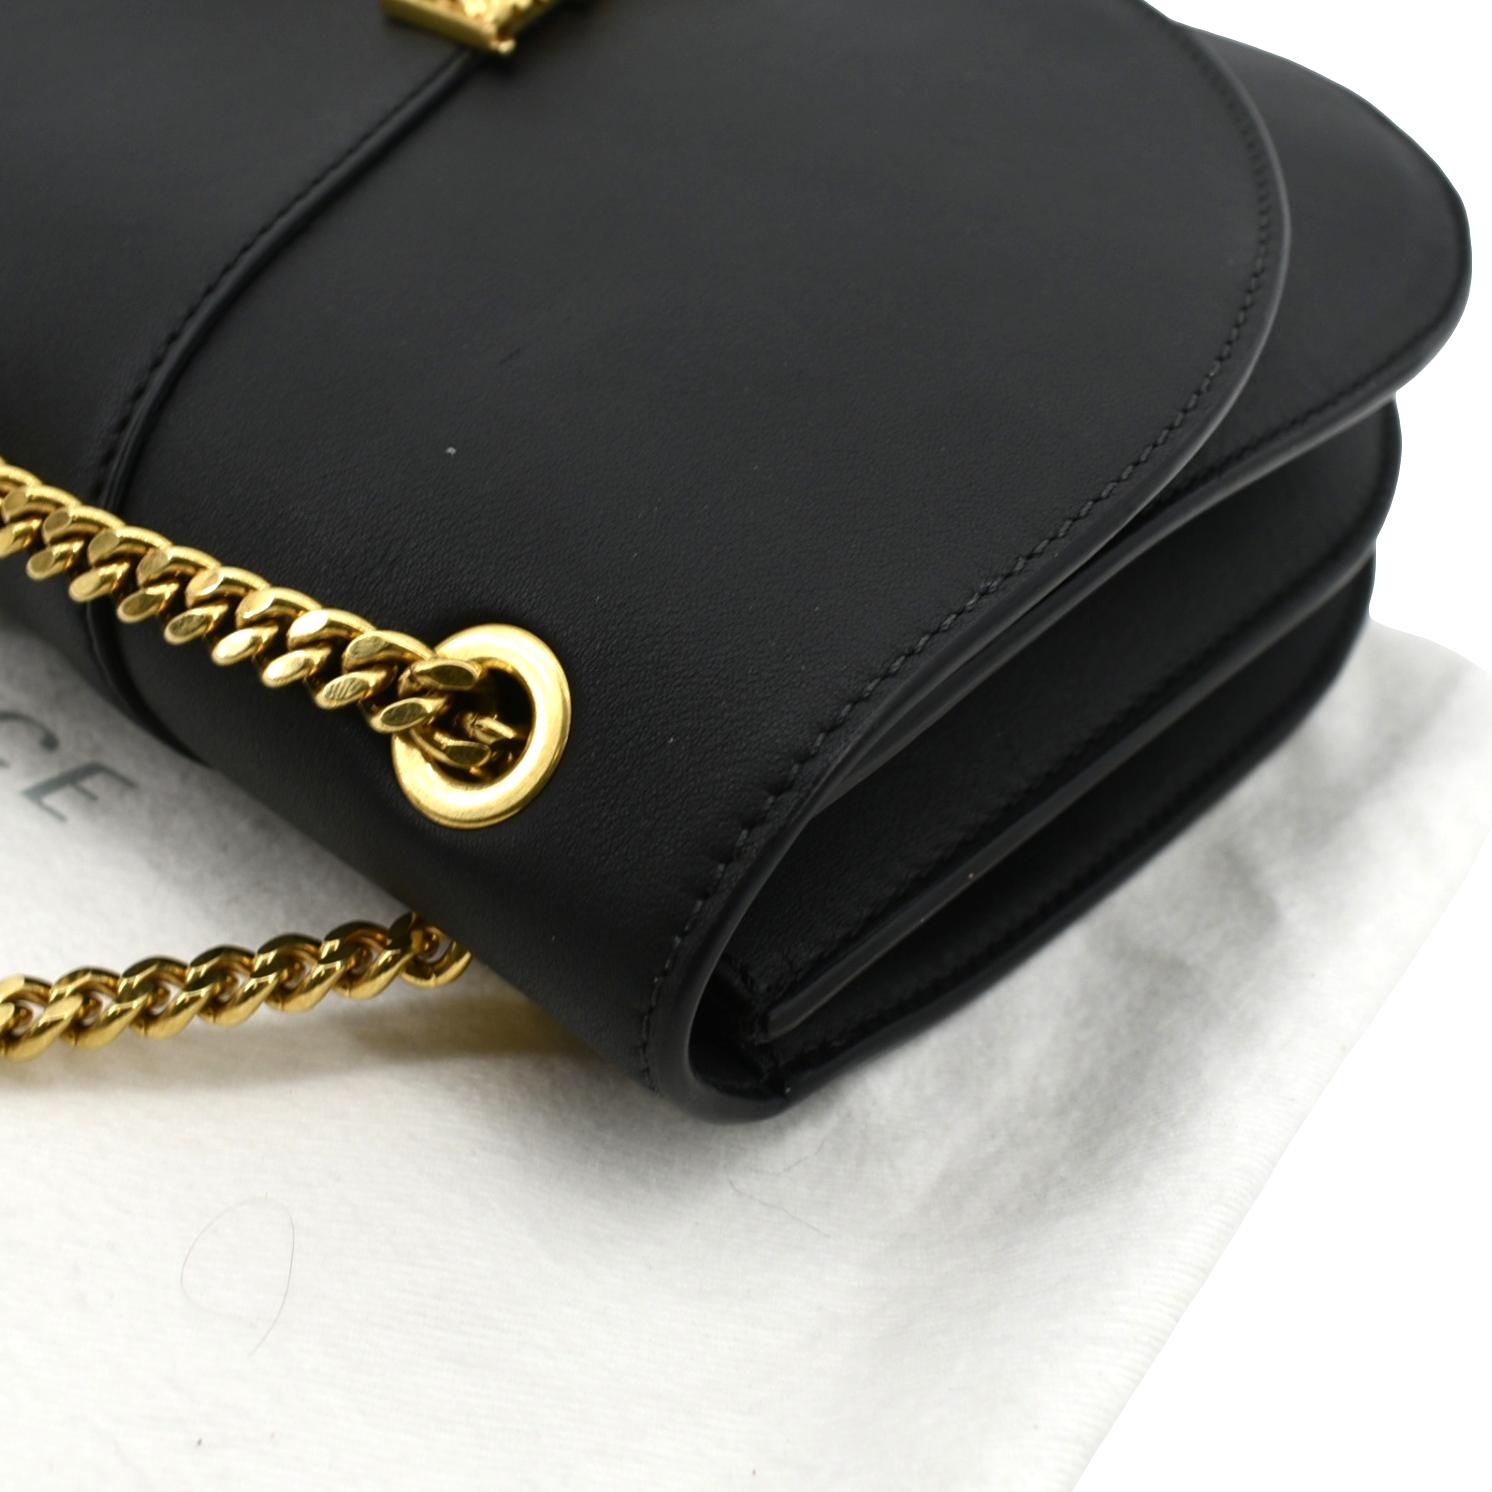 VERSACE: Virtus leather handbag - Black  Versace handbag DBFH21 1D5VIT  online at